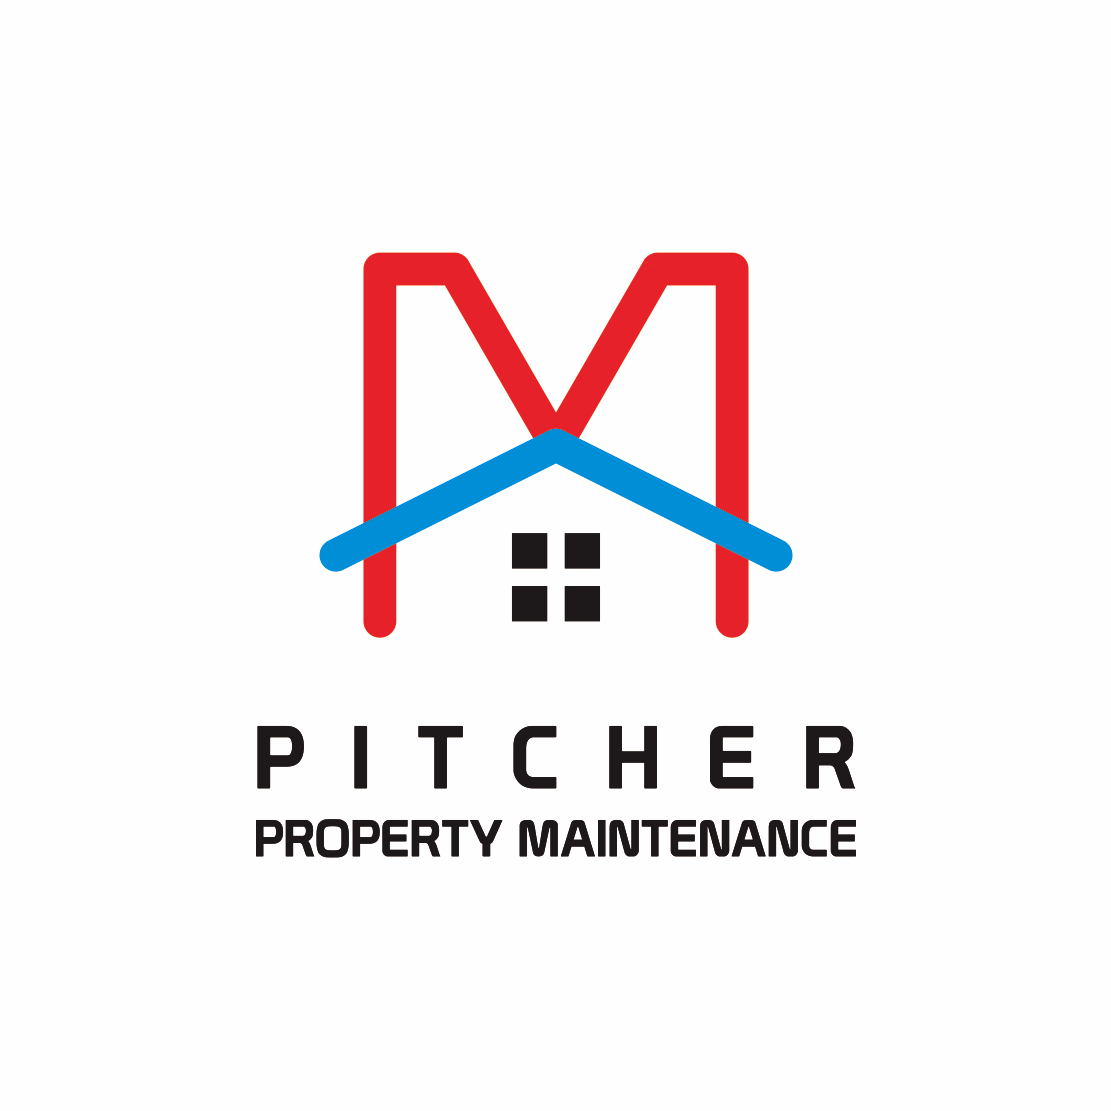 Pitcher Logo - Playful, Professional, It Company Logo Design for Pitcher Property ...